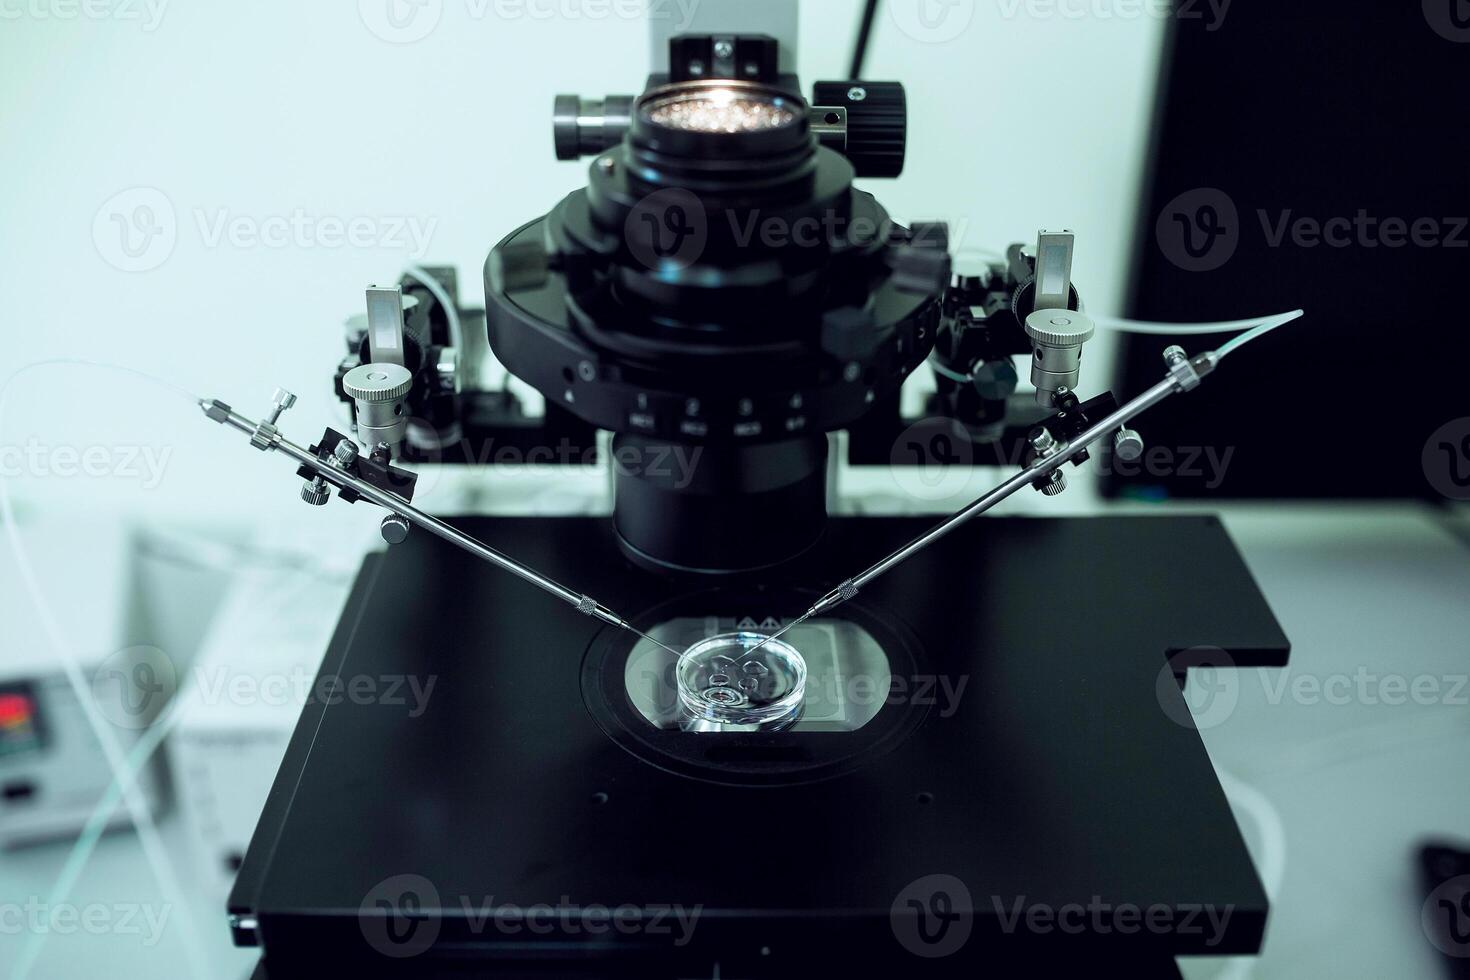 Equipment on laboratory of Fertilization, IVF. Microscope of reproductive medicine clinic fertilizing egg outside female body. Disease laboratory research photo